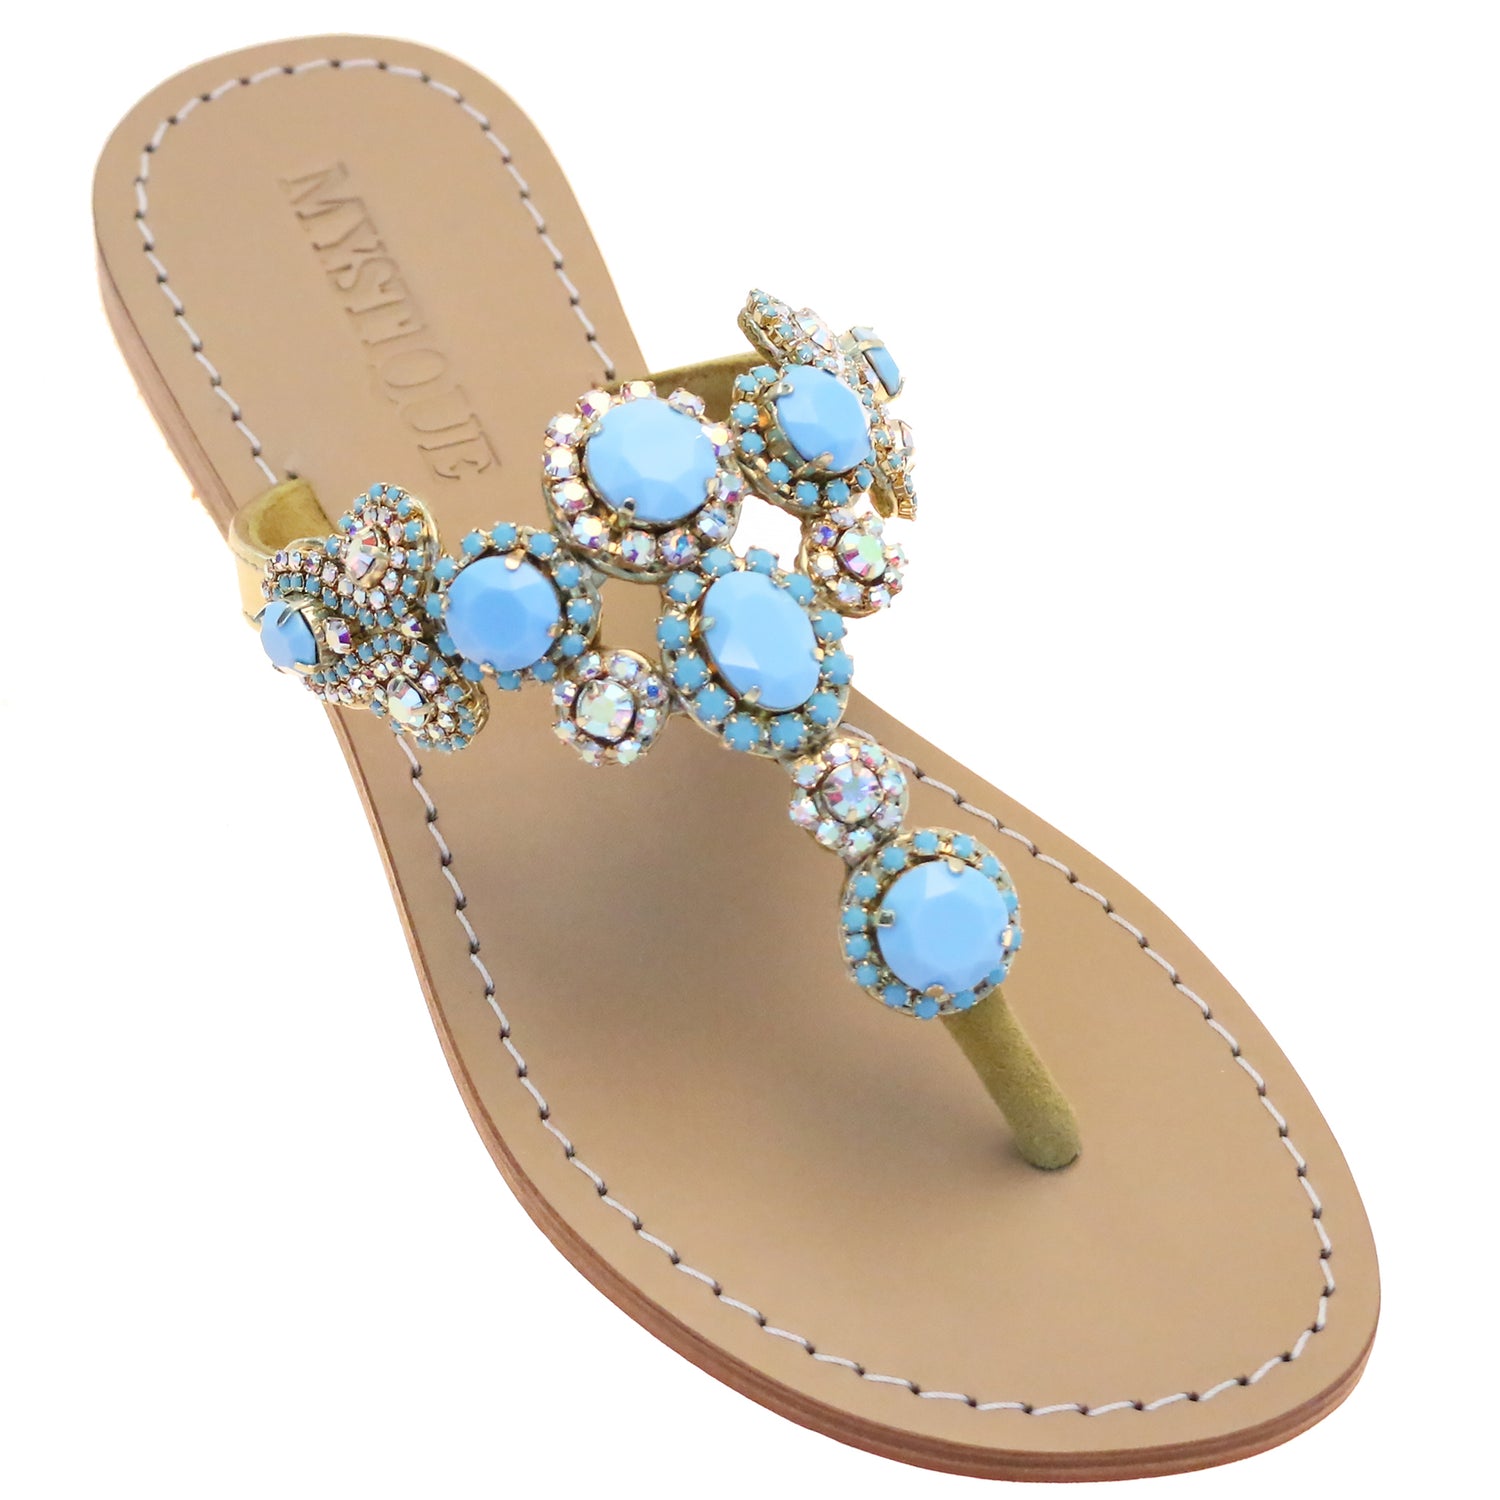 Leather Jeweled Sandals - Mystique Sandals